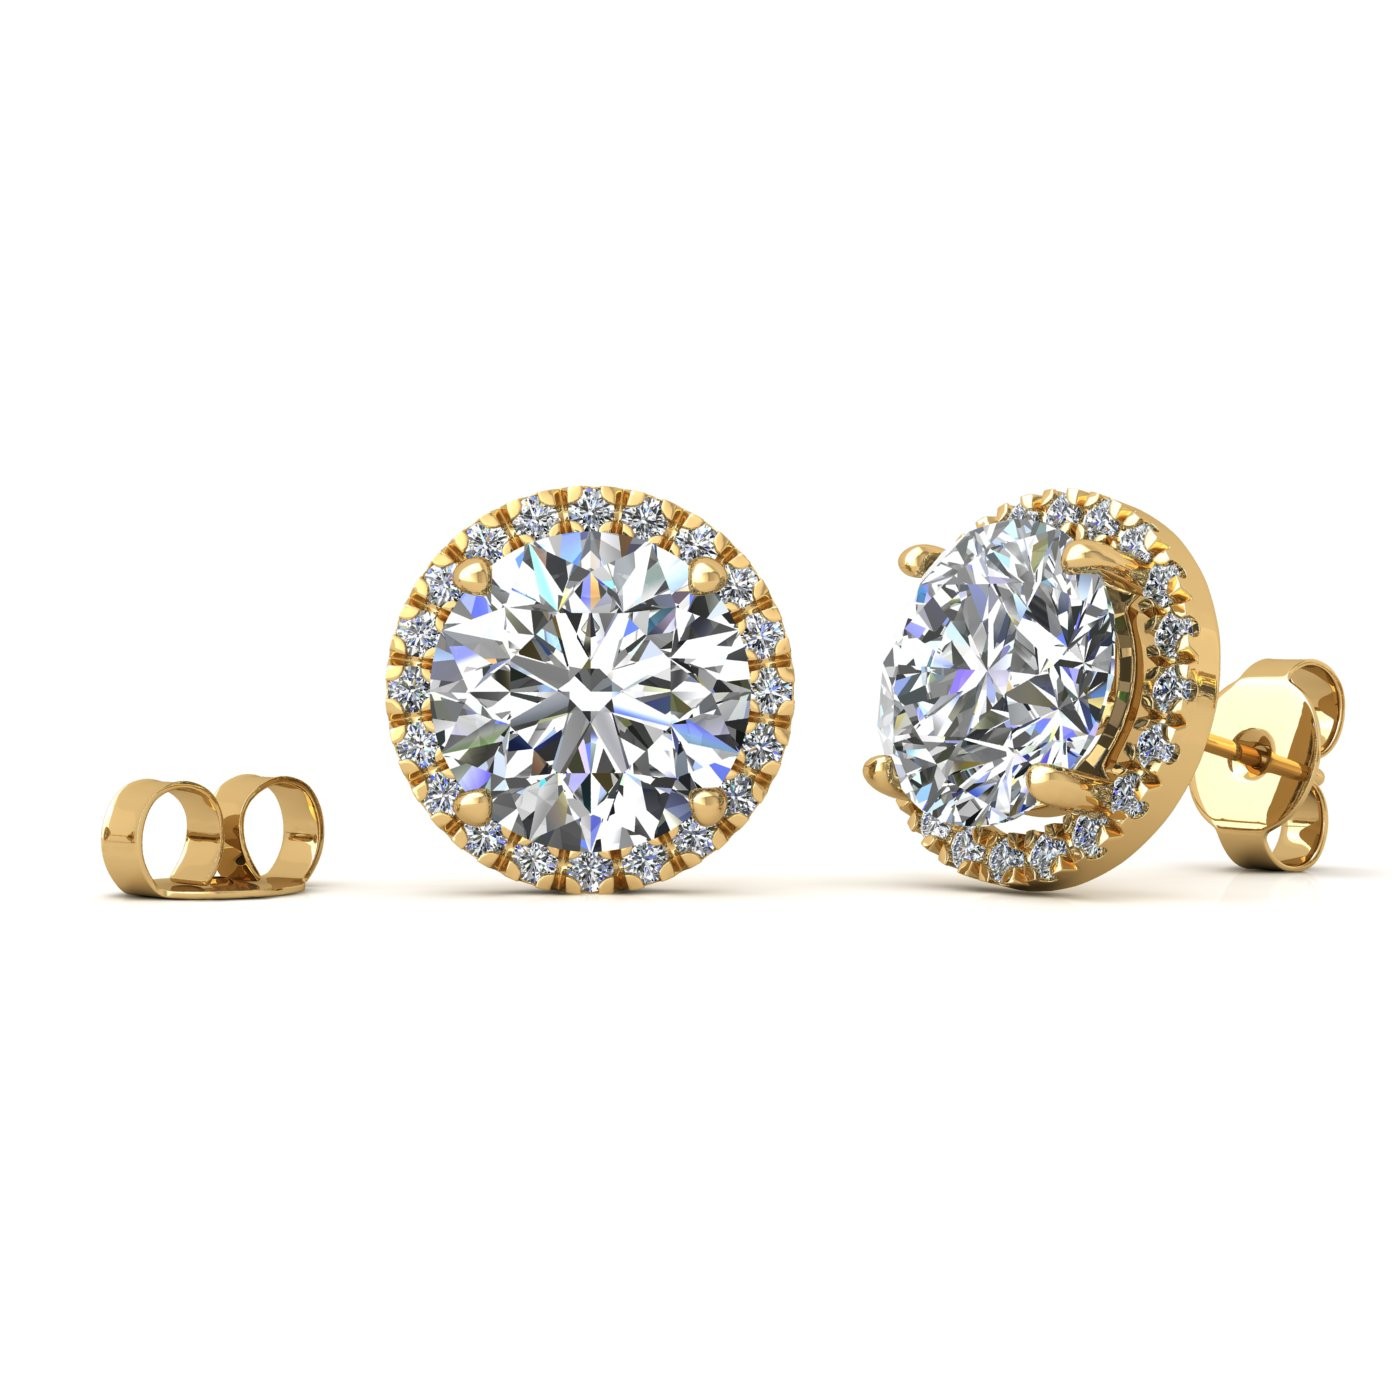 18k yellow gold  0,5 ct each (1,0 tcw) 4 prongs round shape diamond earrings with diamond pavÉ set halo Photos & images